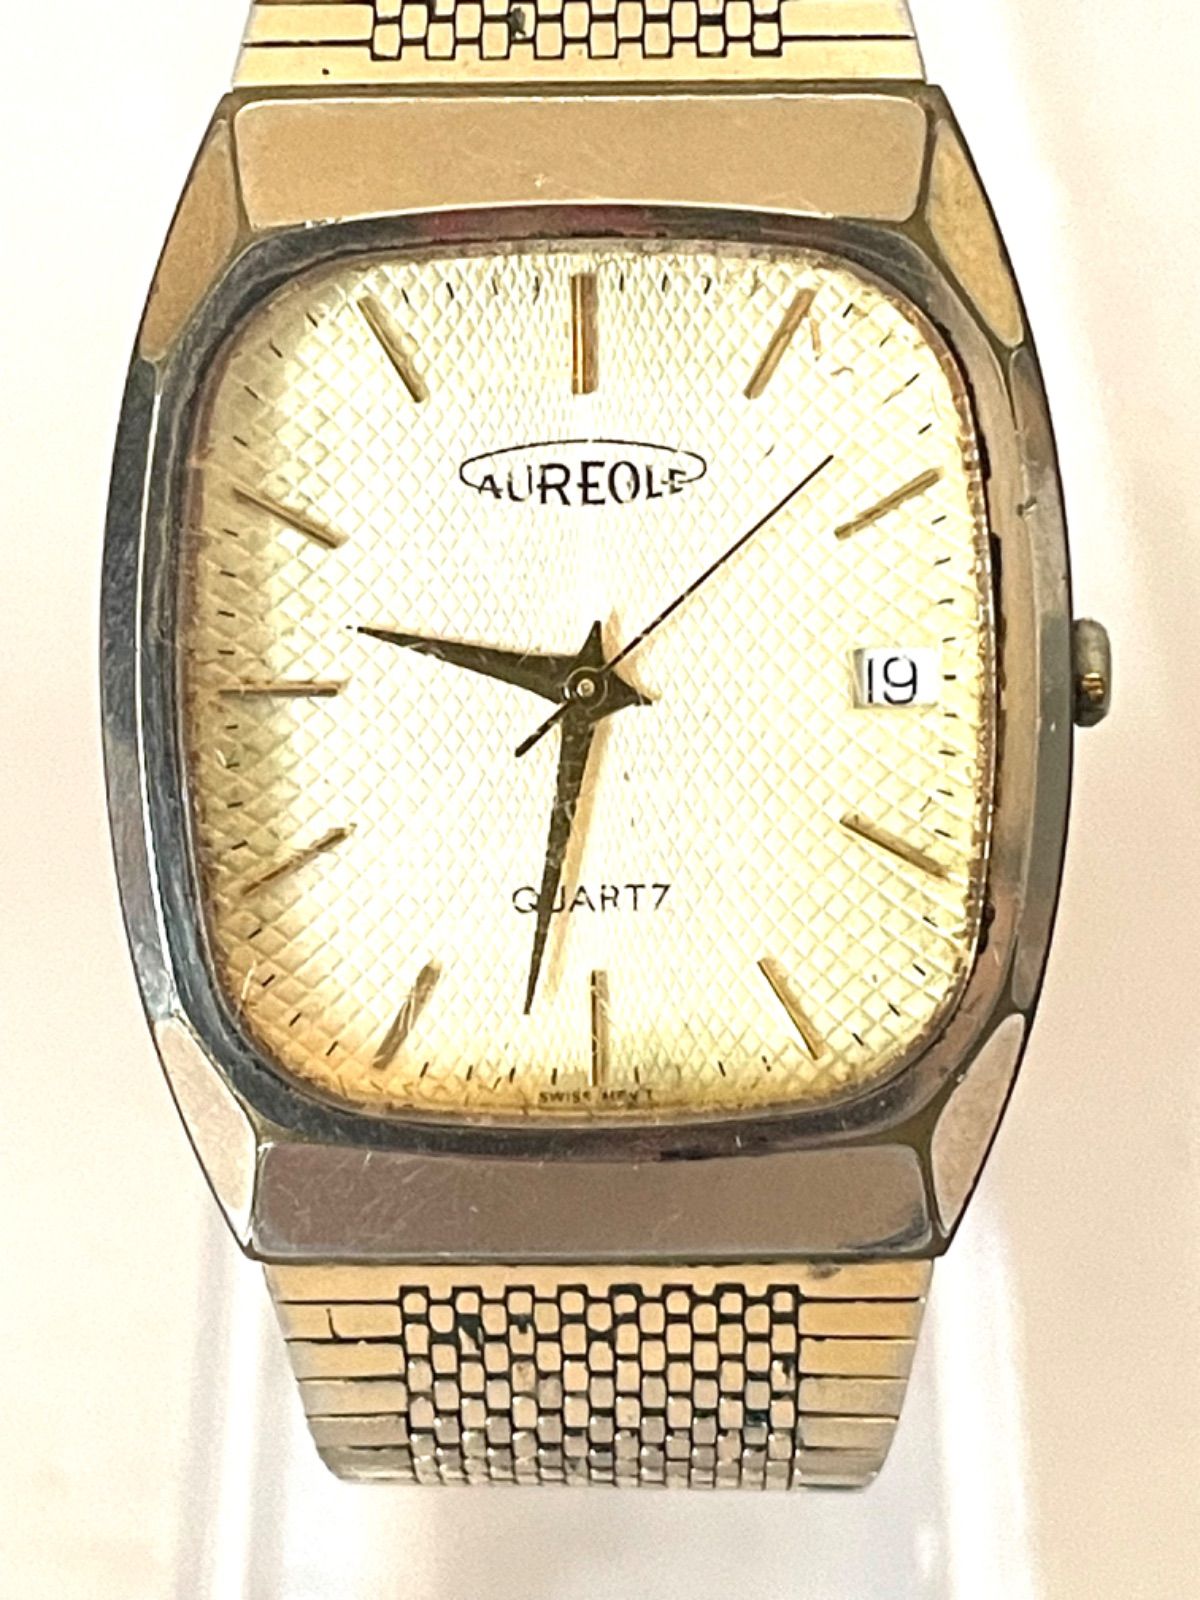 AUREOLE オレオール 腕時計 sw-211 スイス製 ゴールド - 腕時計